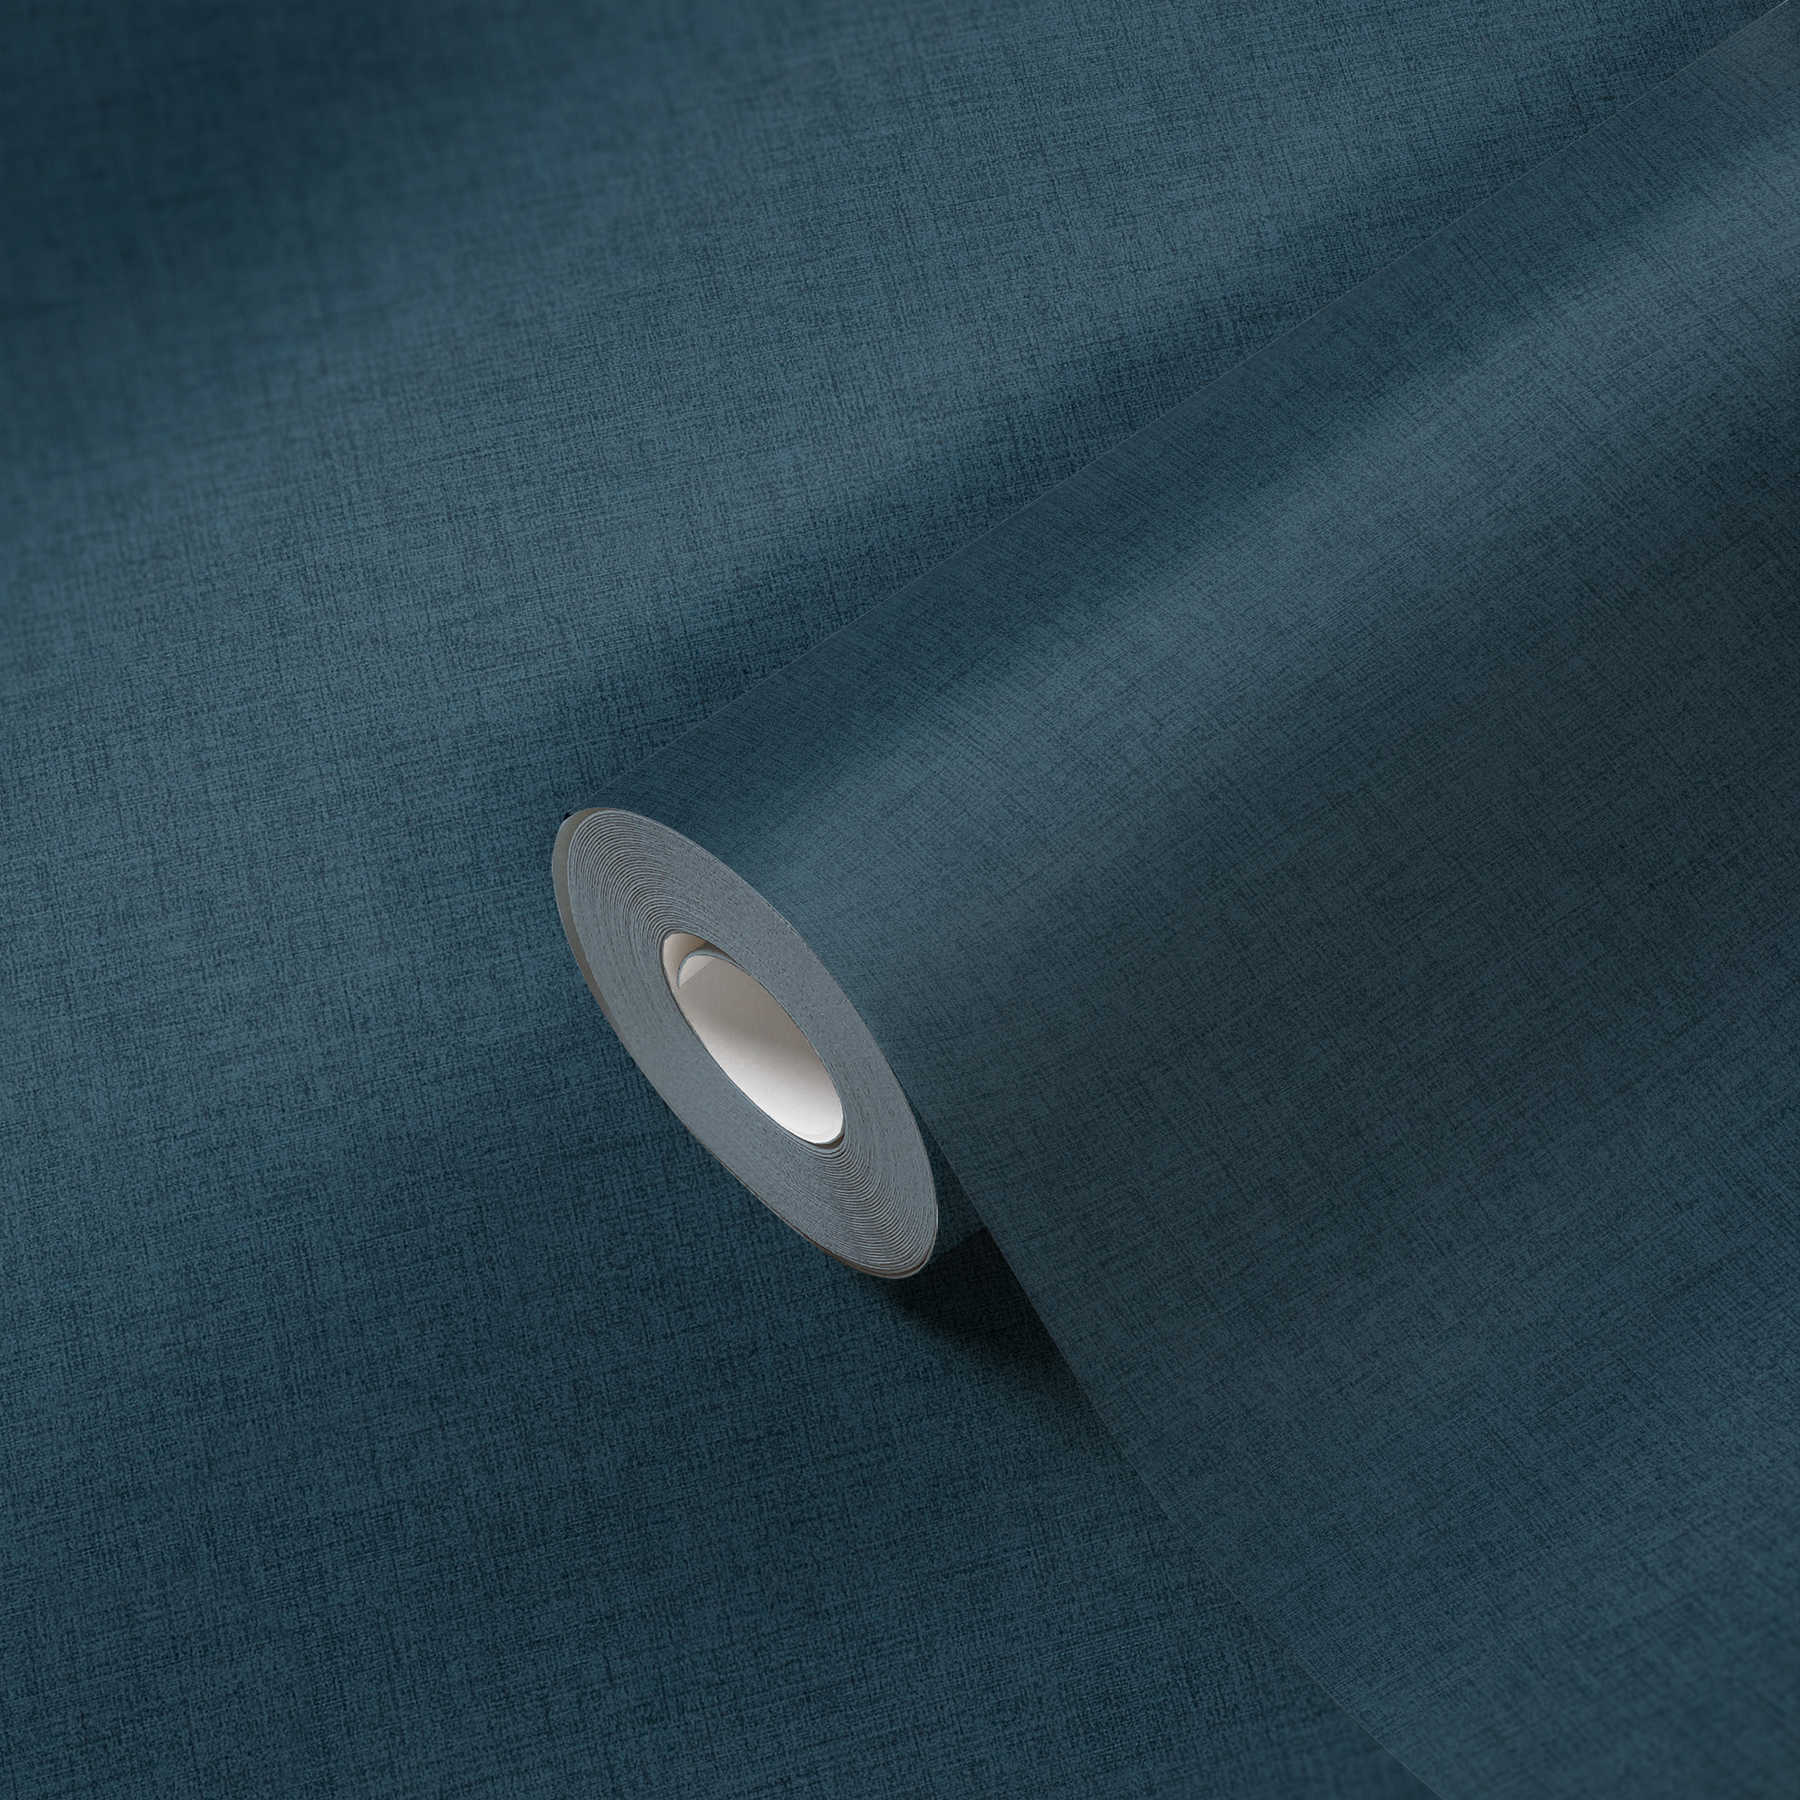             Linen look non-woven wallpaper in petrol blue
        